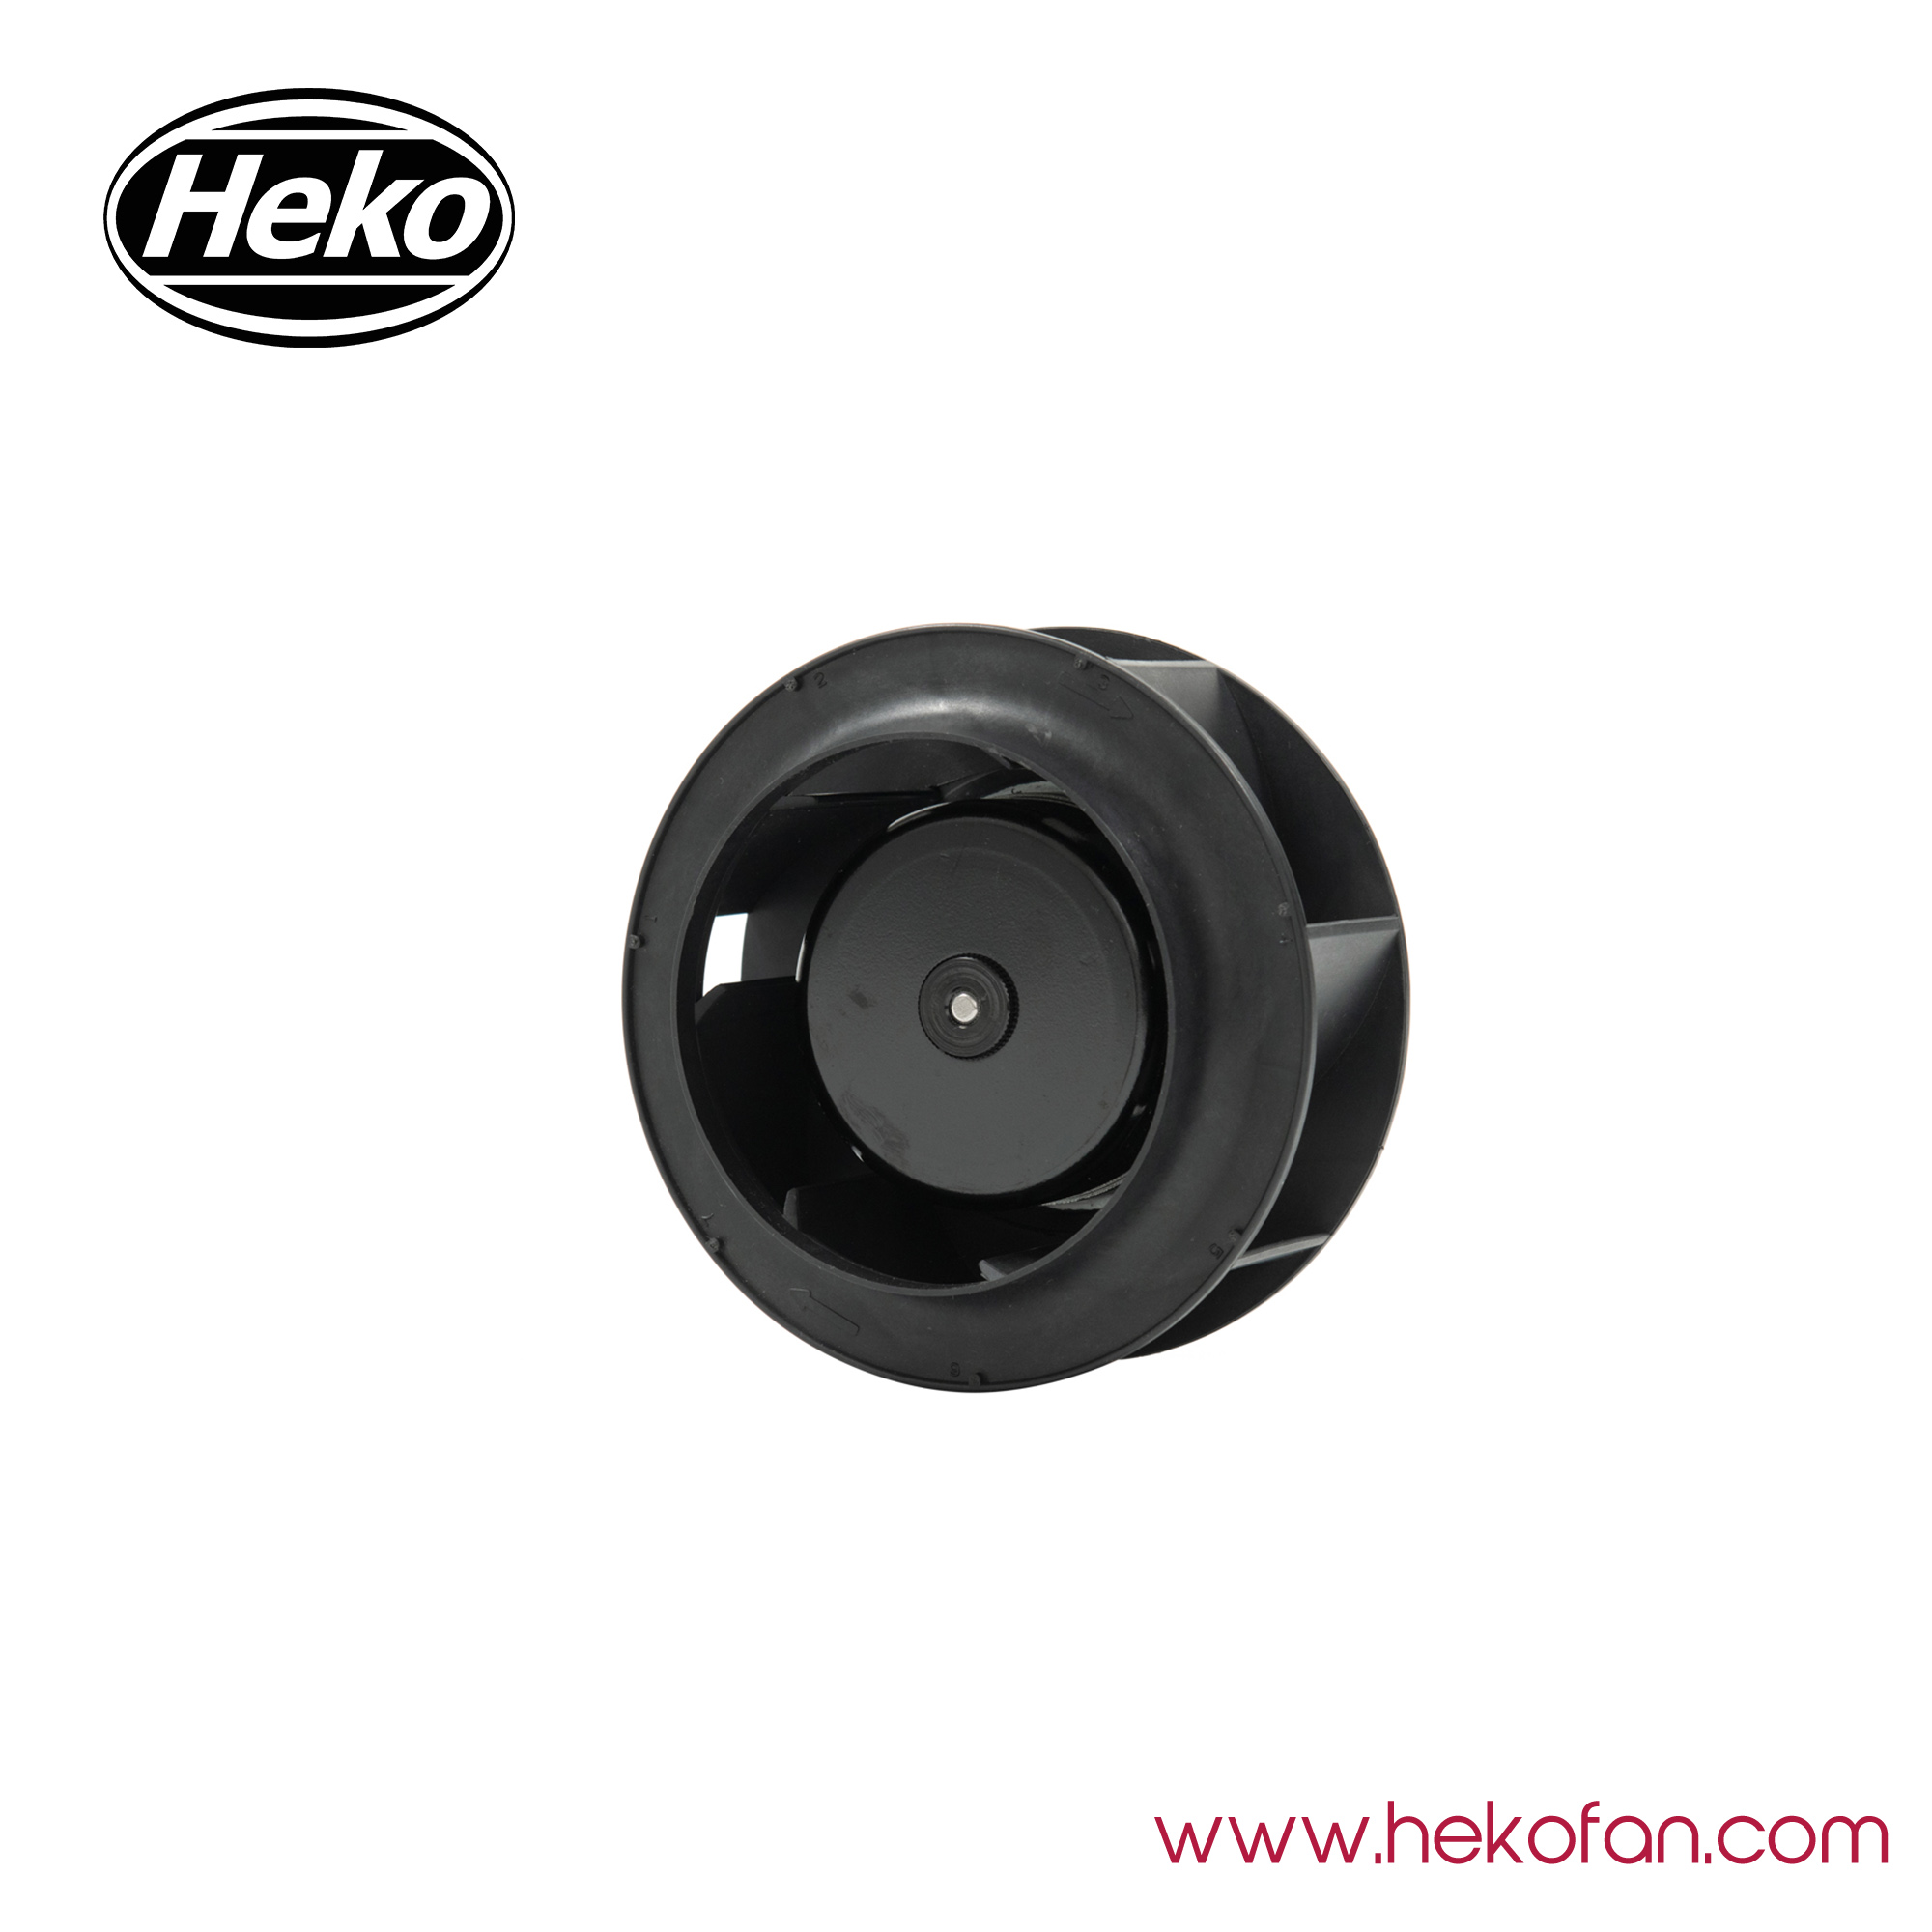 HEKO DC133mm DC Backward Centrifugal For Spray Booth